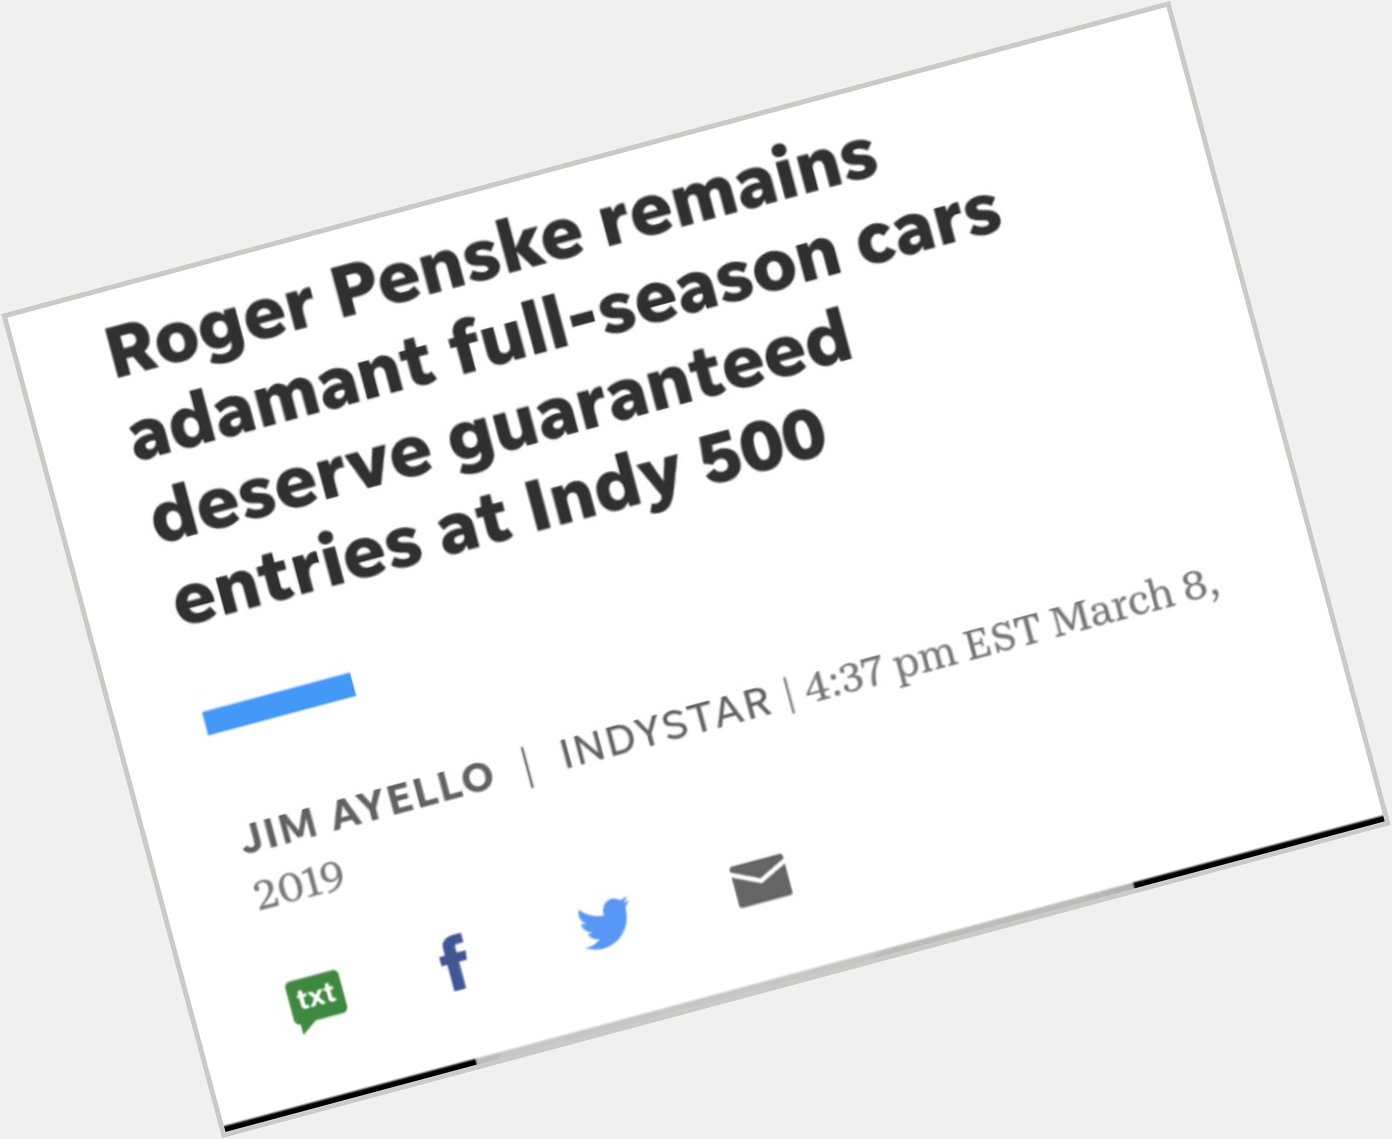 Happy birthday Roger Penske! 